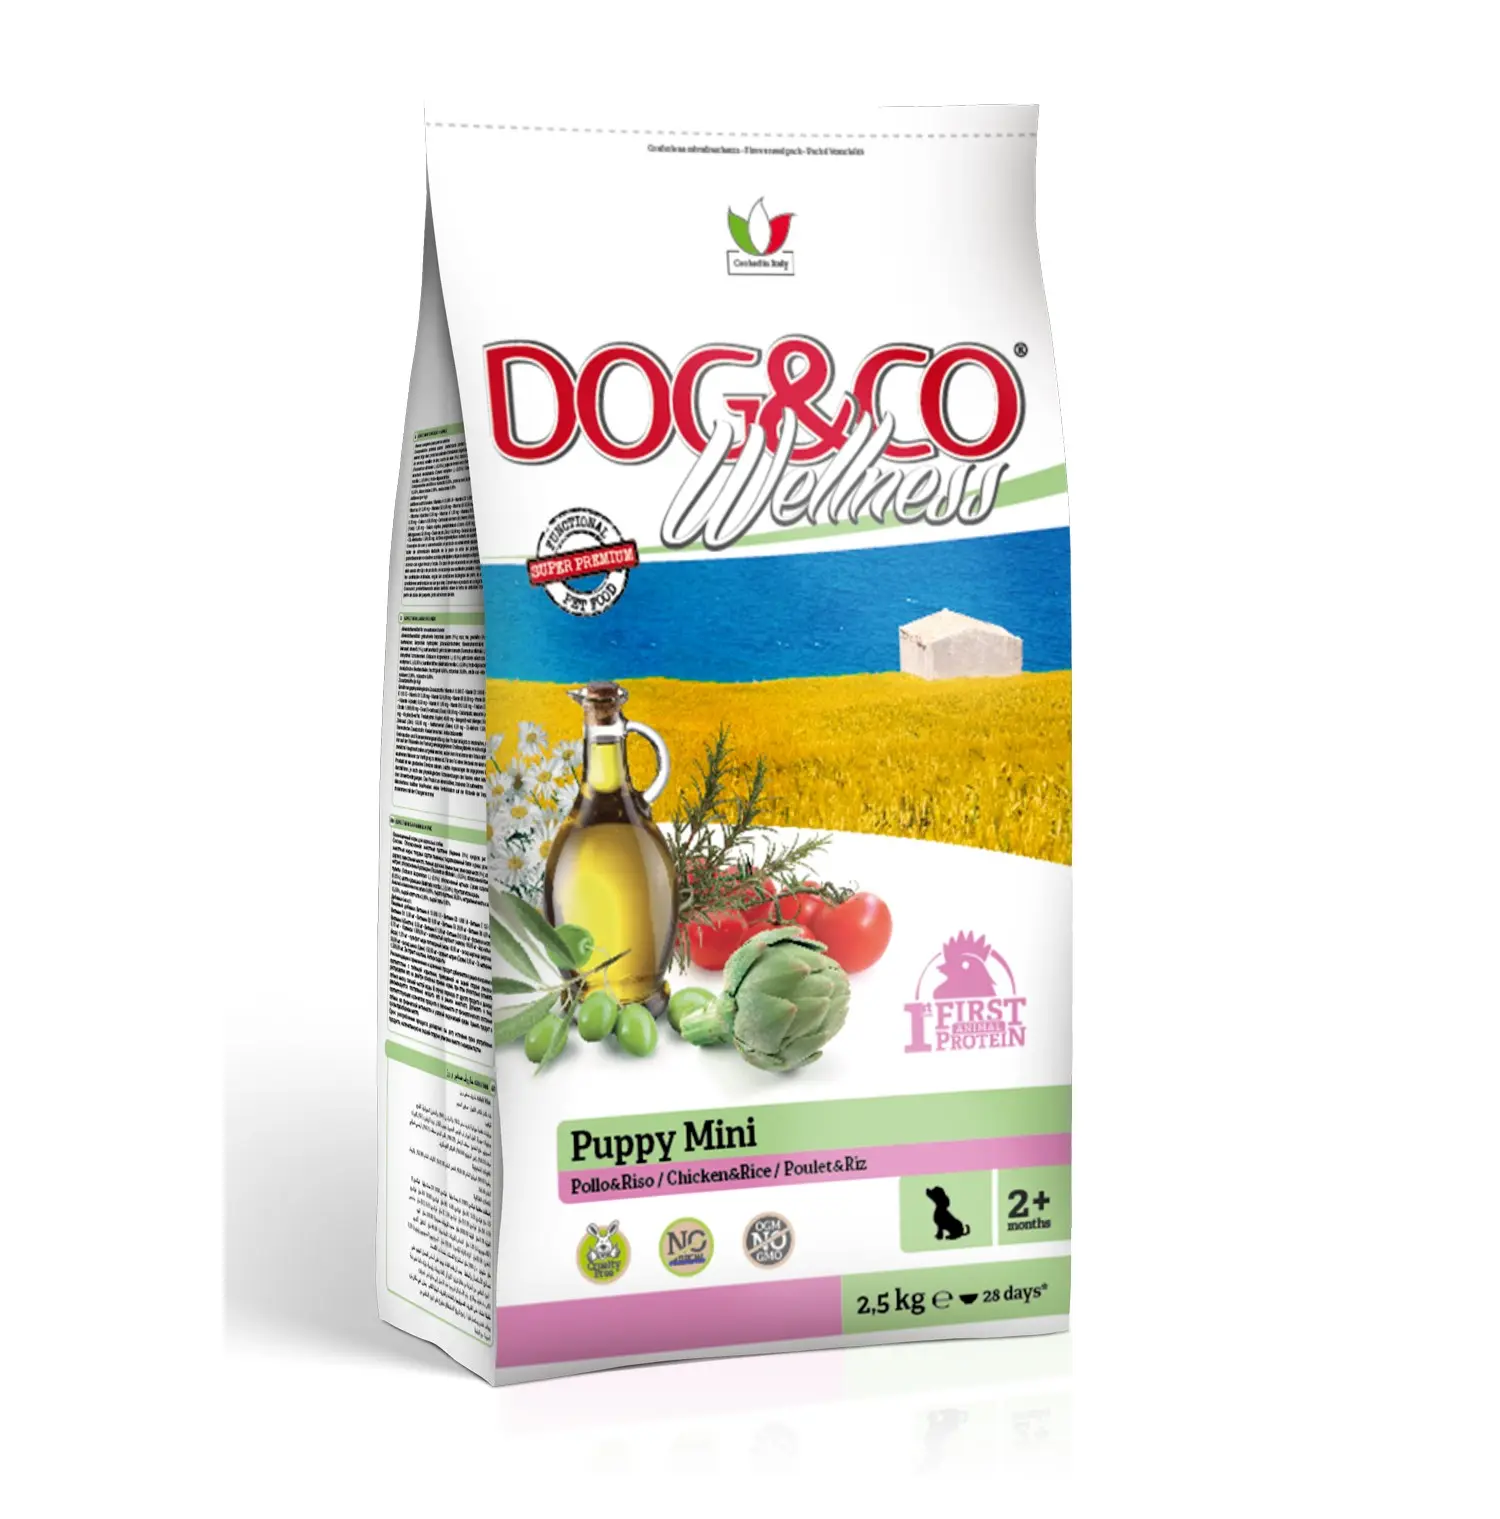 Premium Kwaliteit Italiaanse Hondenvoer Hond & Co Wellness Hondenvoer Met Mediterrane Ingrediënten 2.5Kg